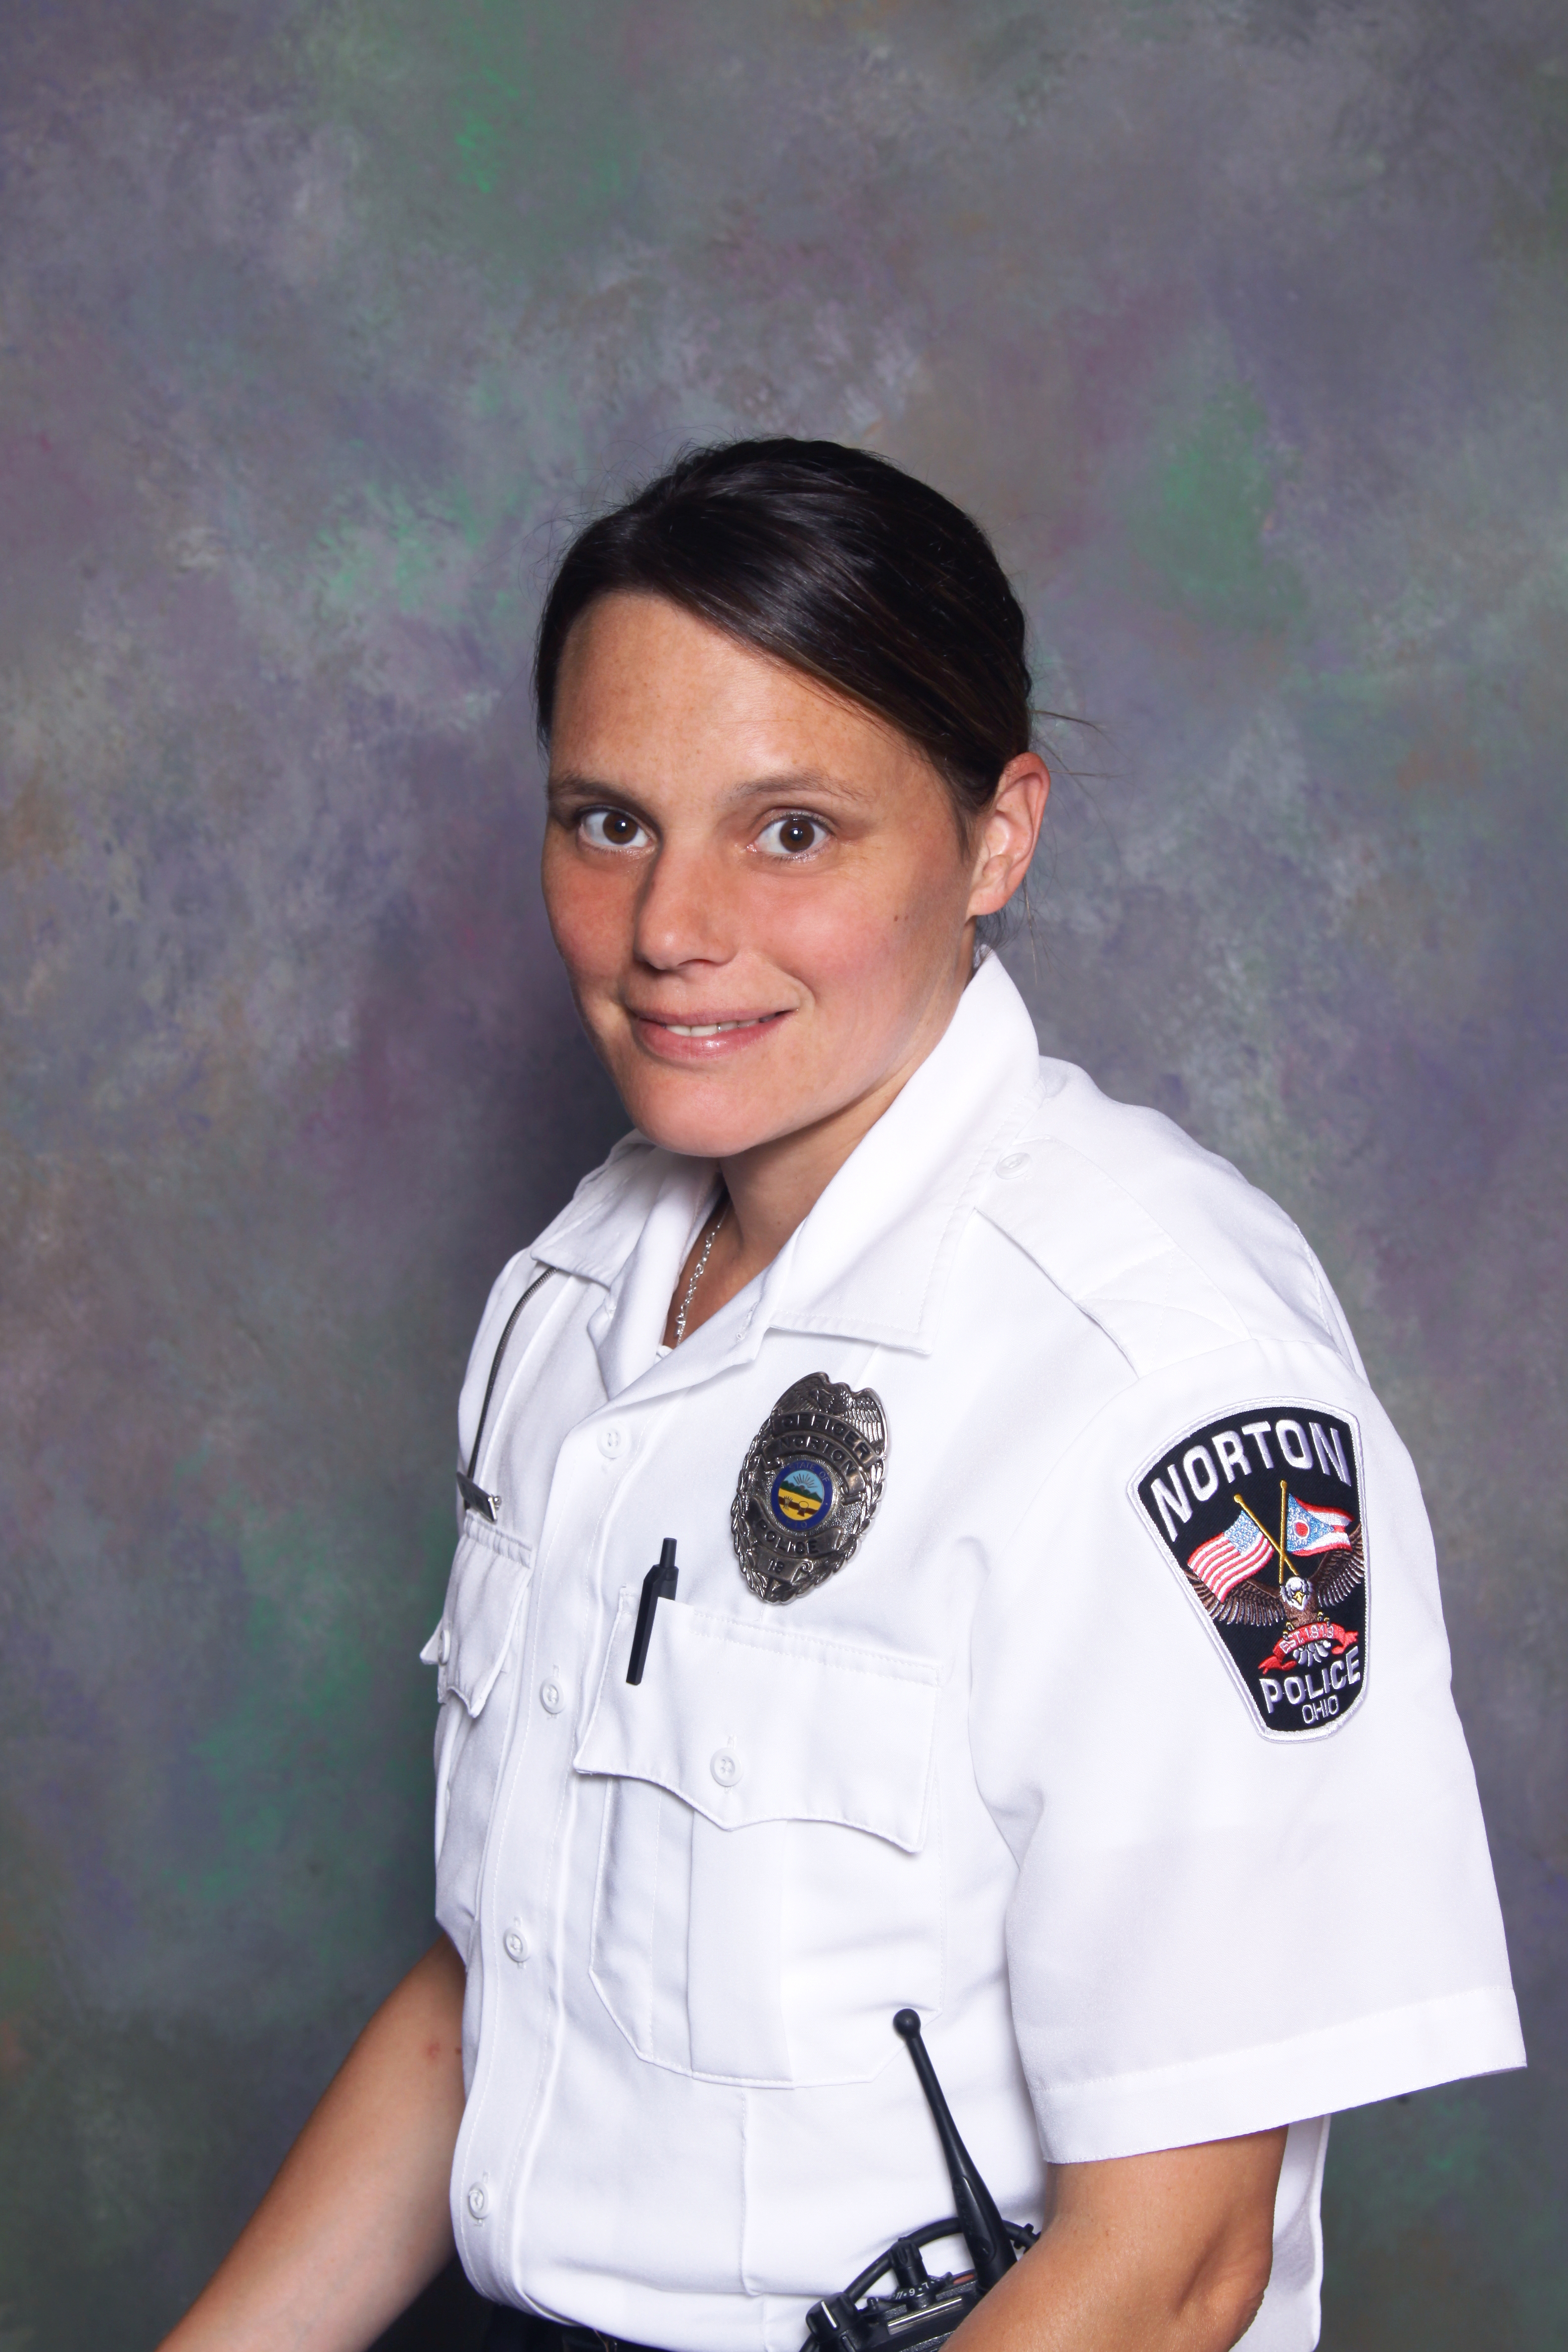 Officer Heather Bauer, Norton Police Department